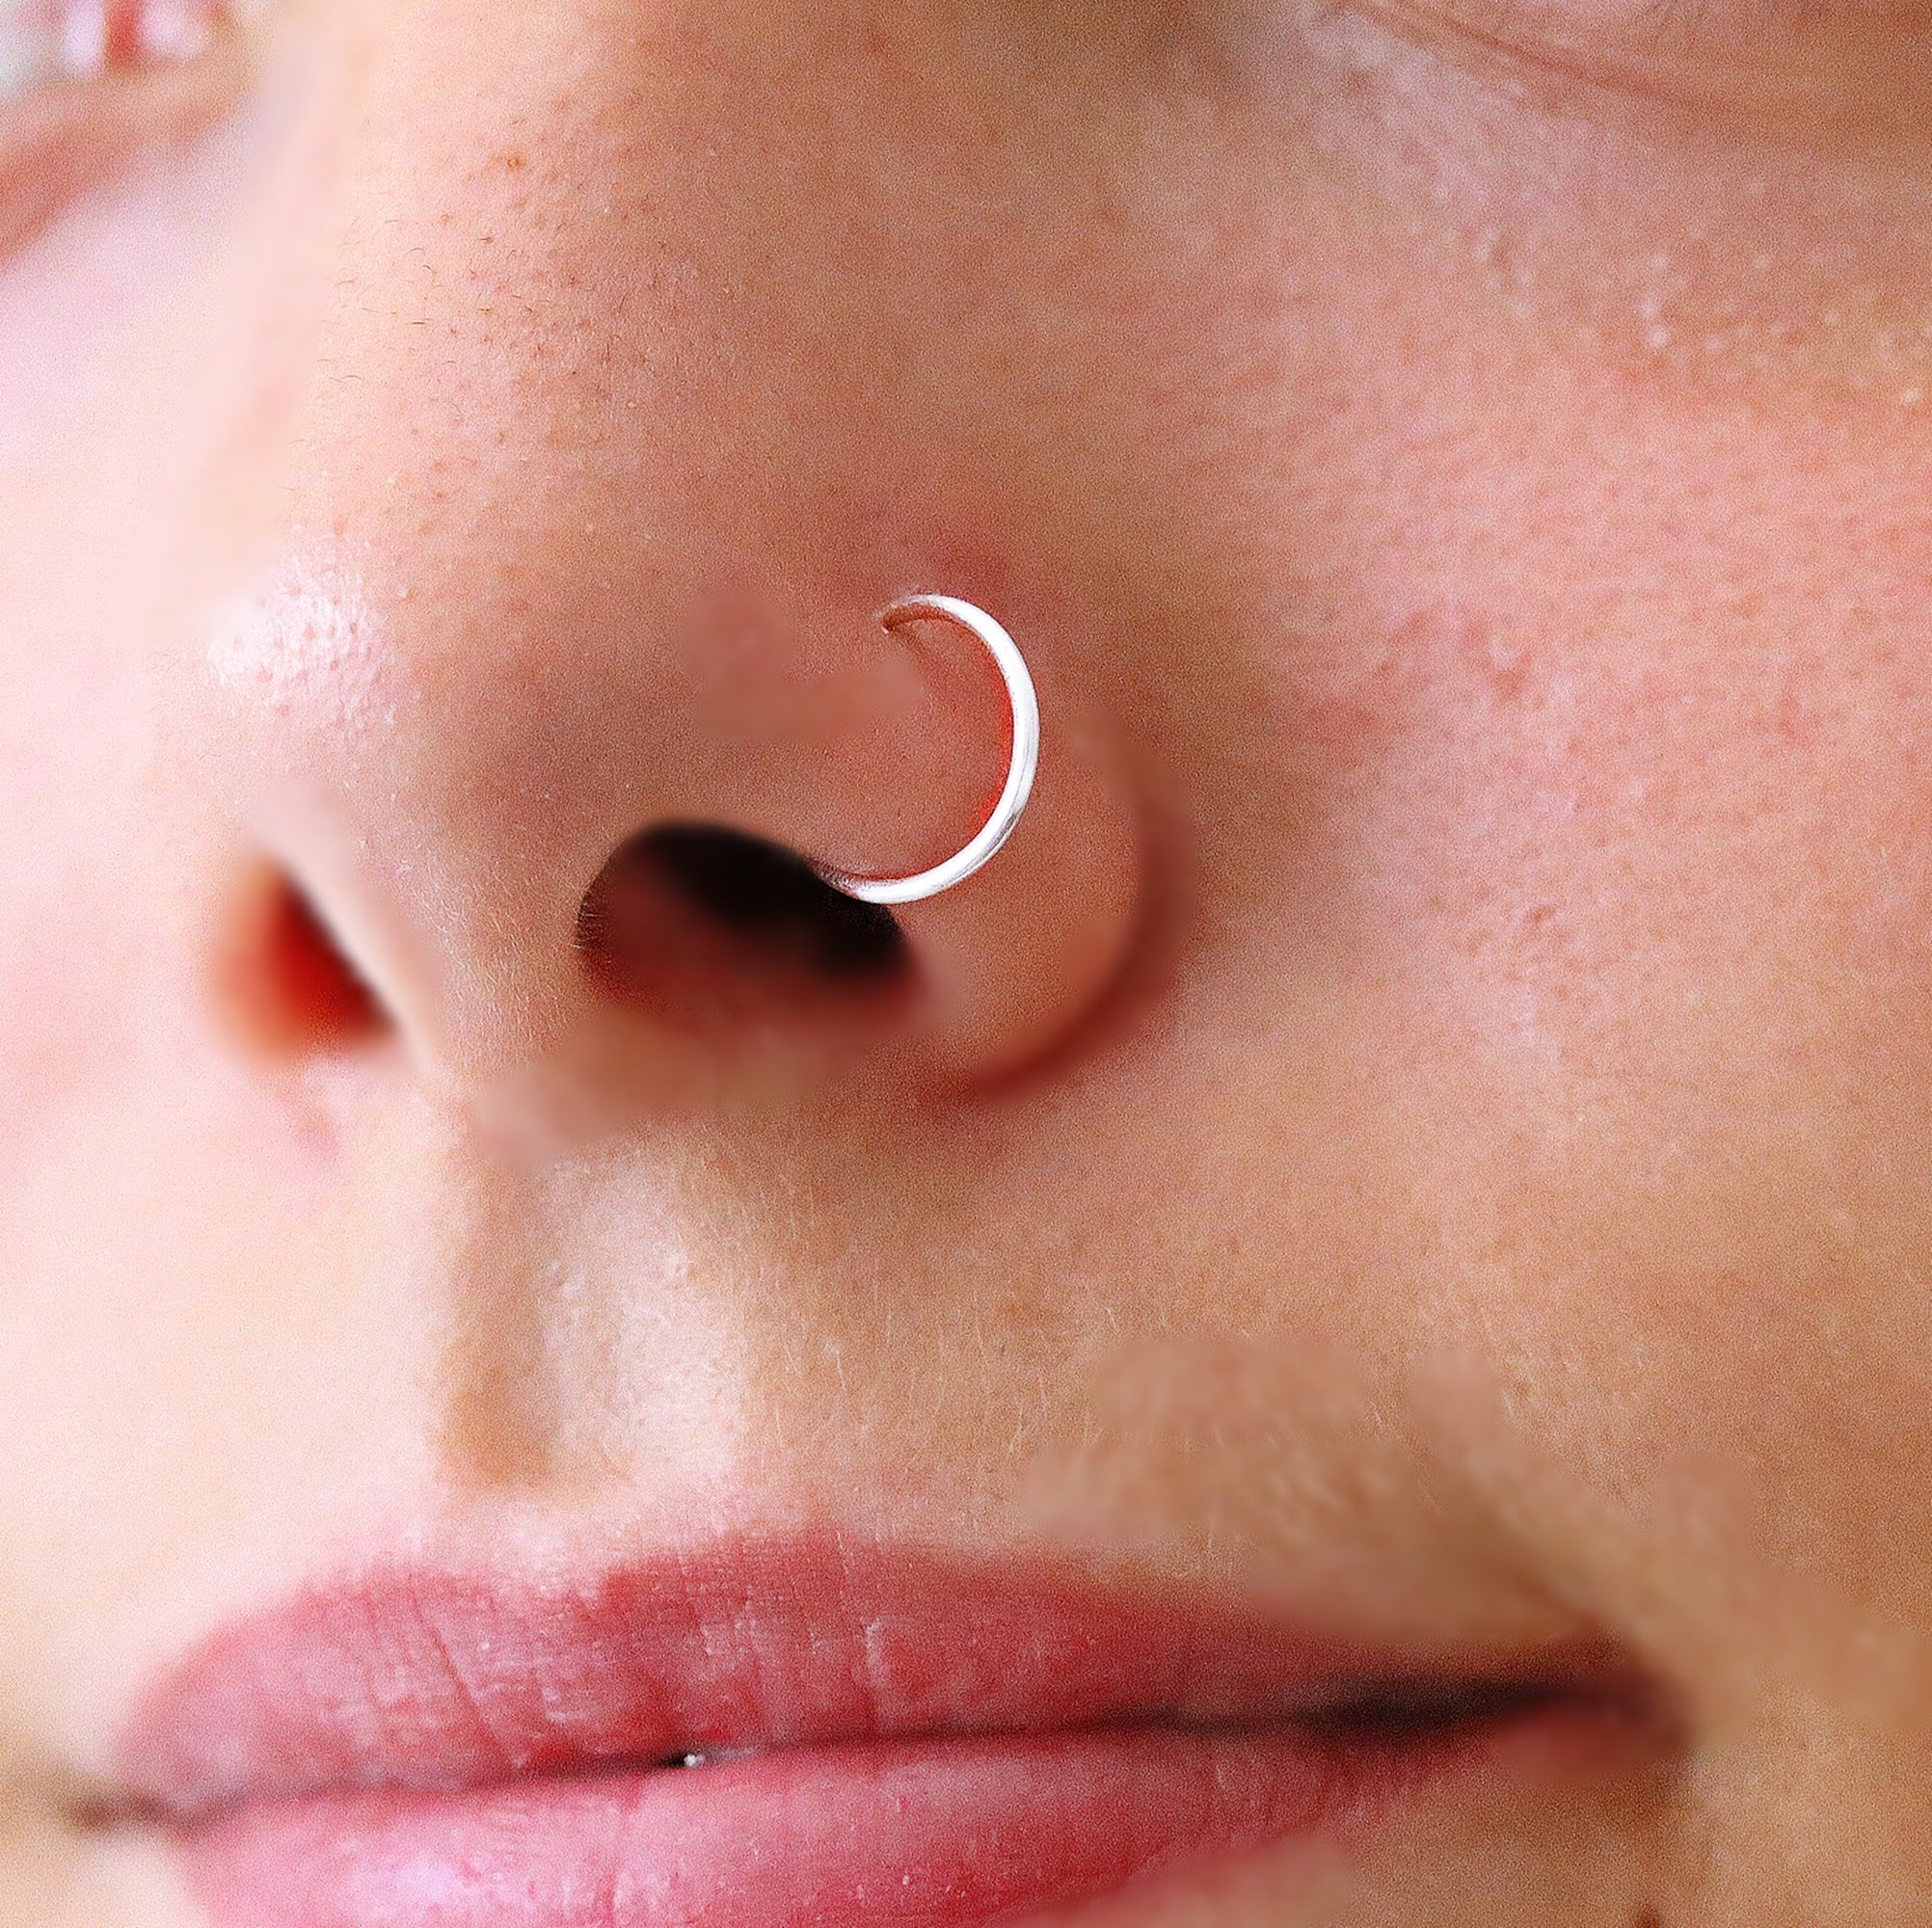 Single Hoop Nose Ring - Gold Vermeil - TinyBox Jewelry